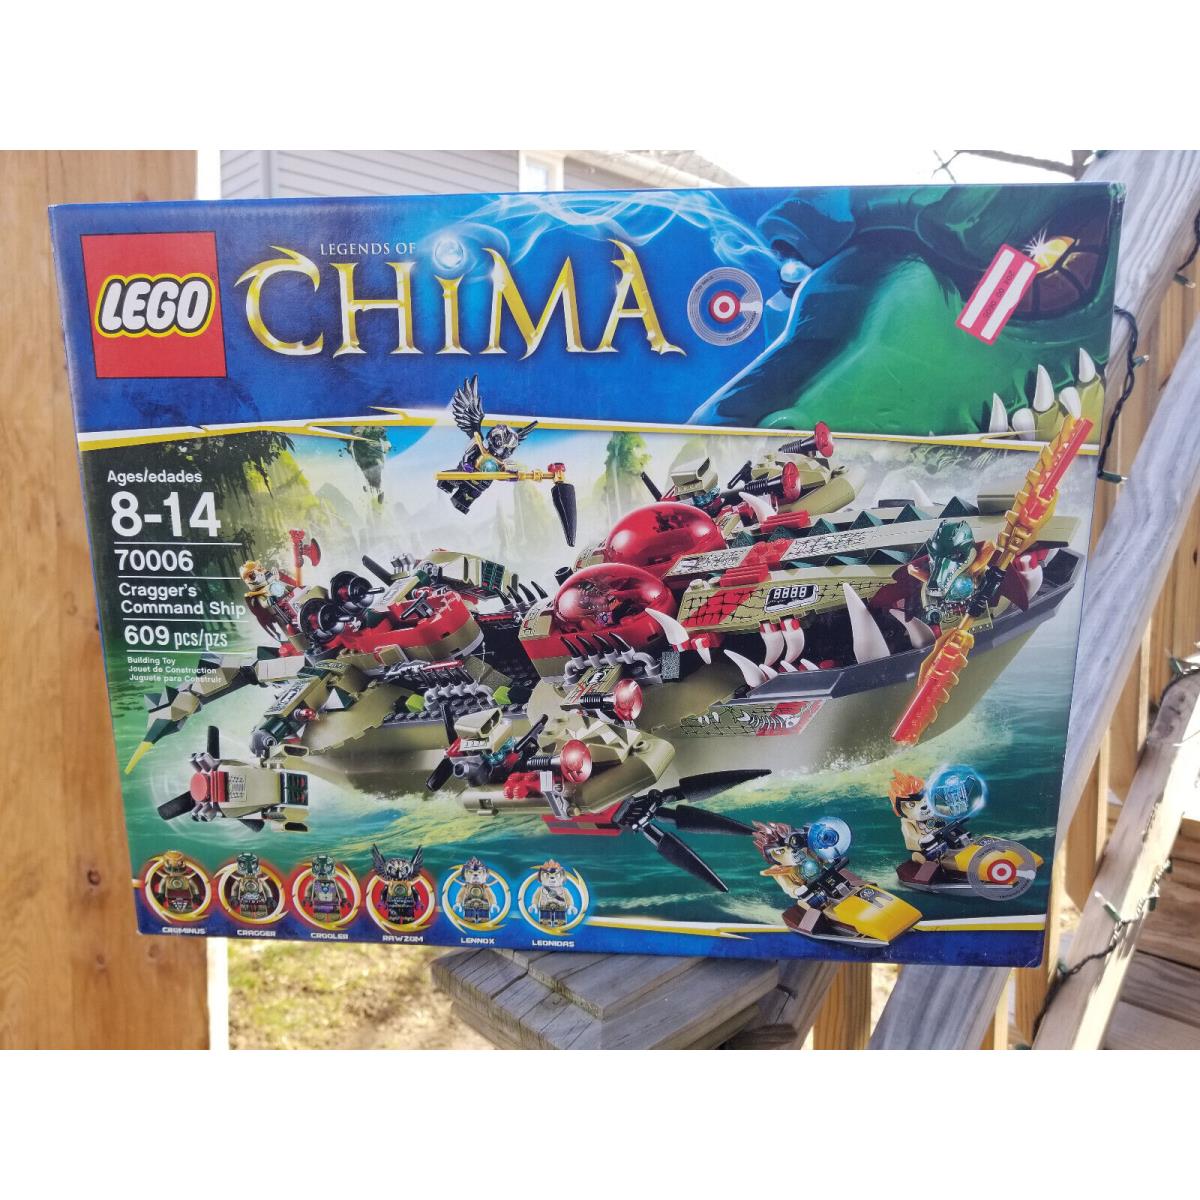 Lego 70006 Chima Craggers Command Ship Chi Minifigures Tribe Lion Plane Boat Usa